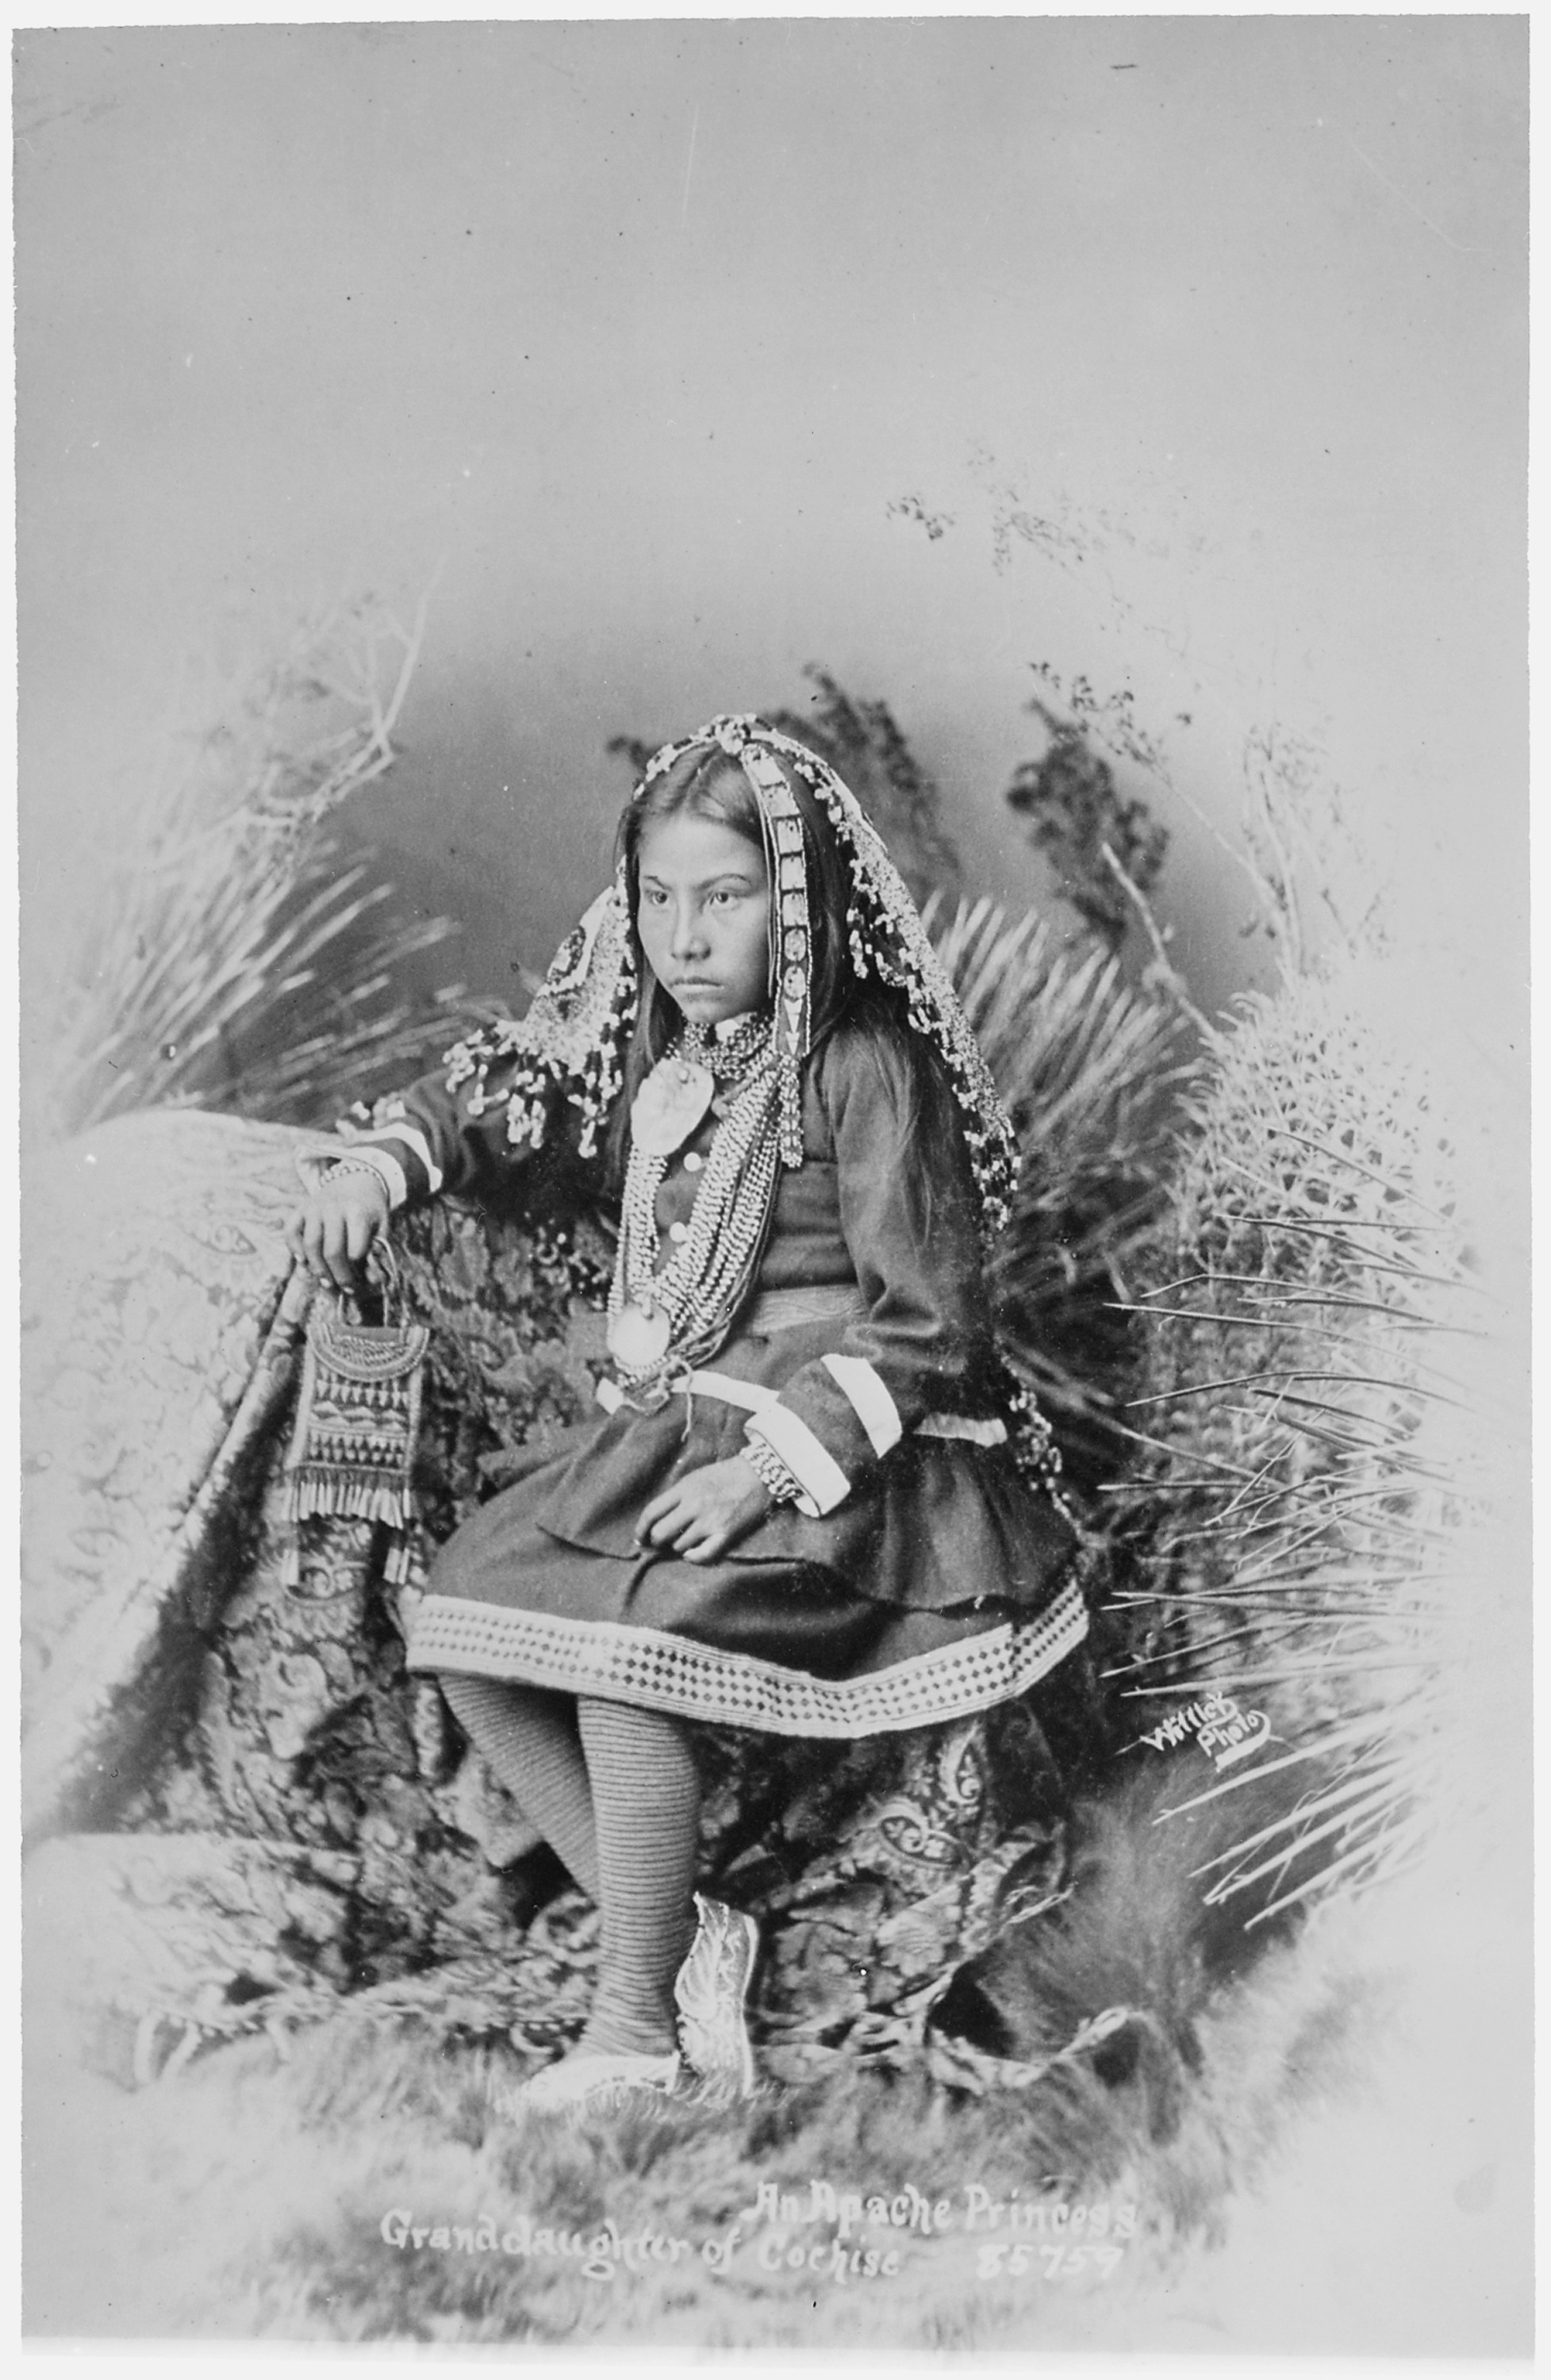 Chiricahua Apache girl, granddaughter of Cochise, full-length, seated, 1886 - NARA - 530900